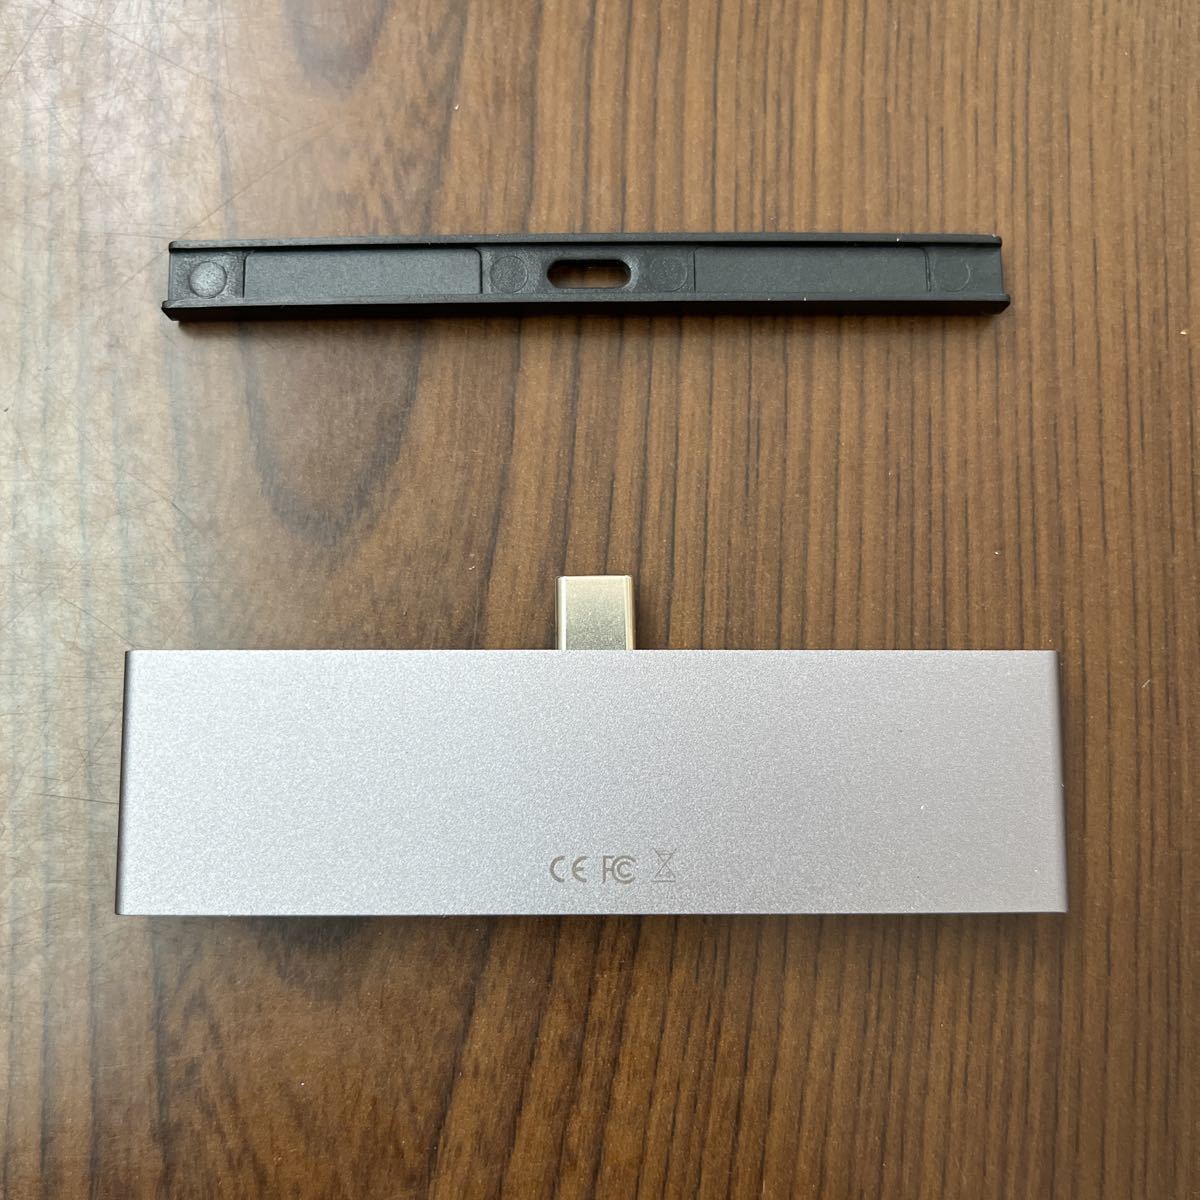 507a1424☆ Colorii iPad Pro 6in1 USB-C Hub【4K HDMI/microSD ・ SD カードリーダー/USB-A / 3.5mm イヤホンジャック_画像4